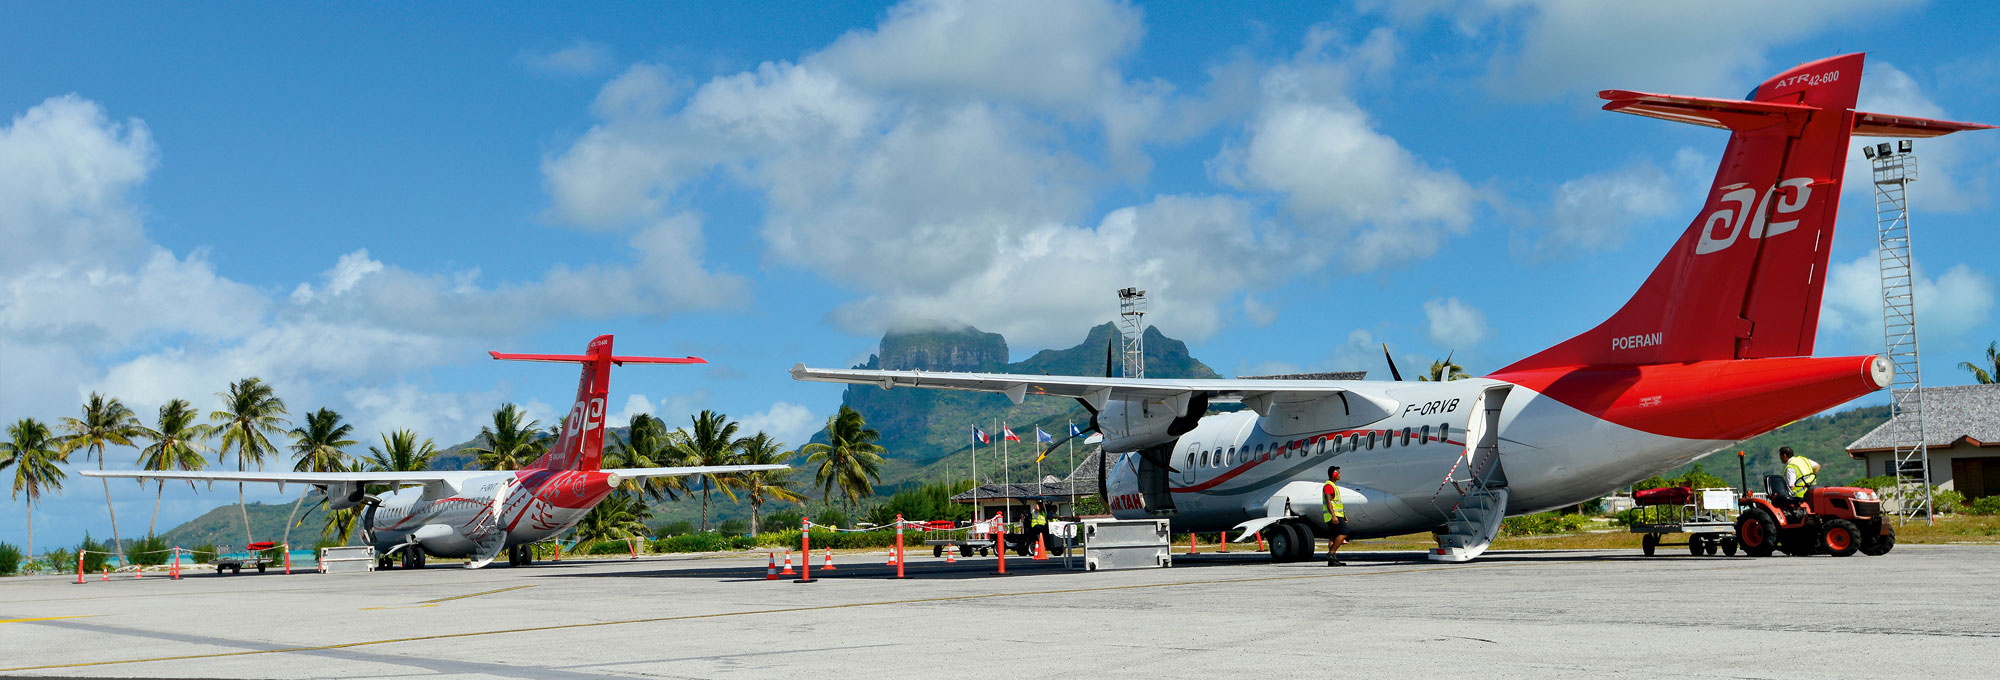 Air Tahiti, the airline connecting the islands of Tahiti - Official website  - AIR TAHITI